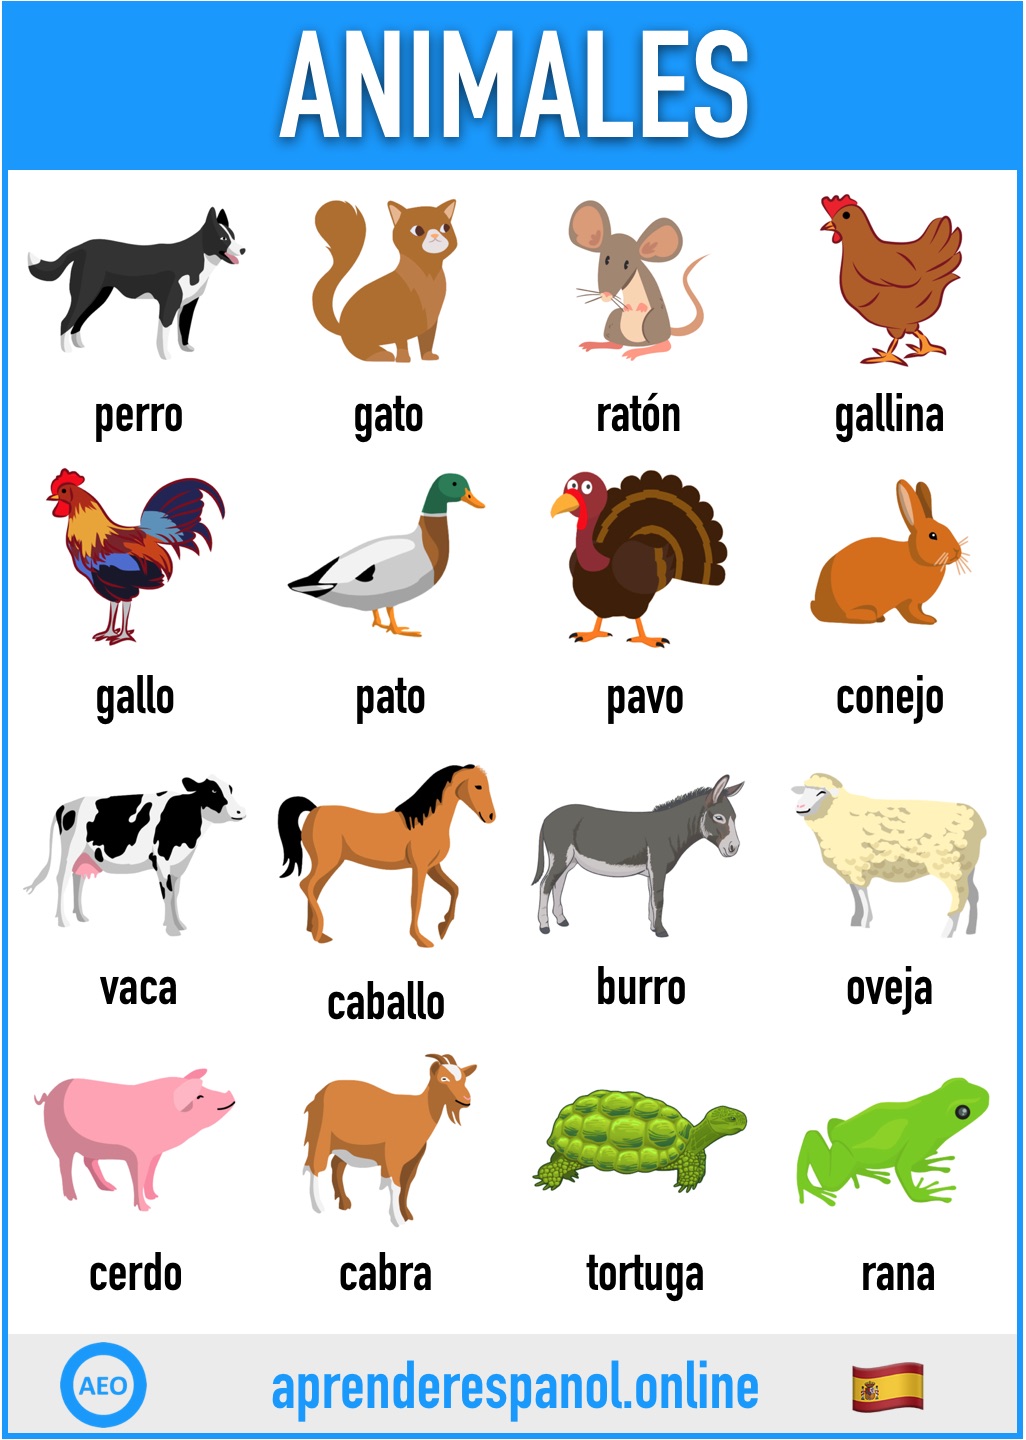 animales en español - aprender español online - vocabulario de los animales en español - animals in spanish - vocabulary of animals in spanish